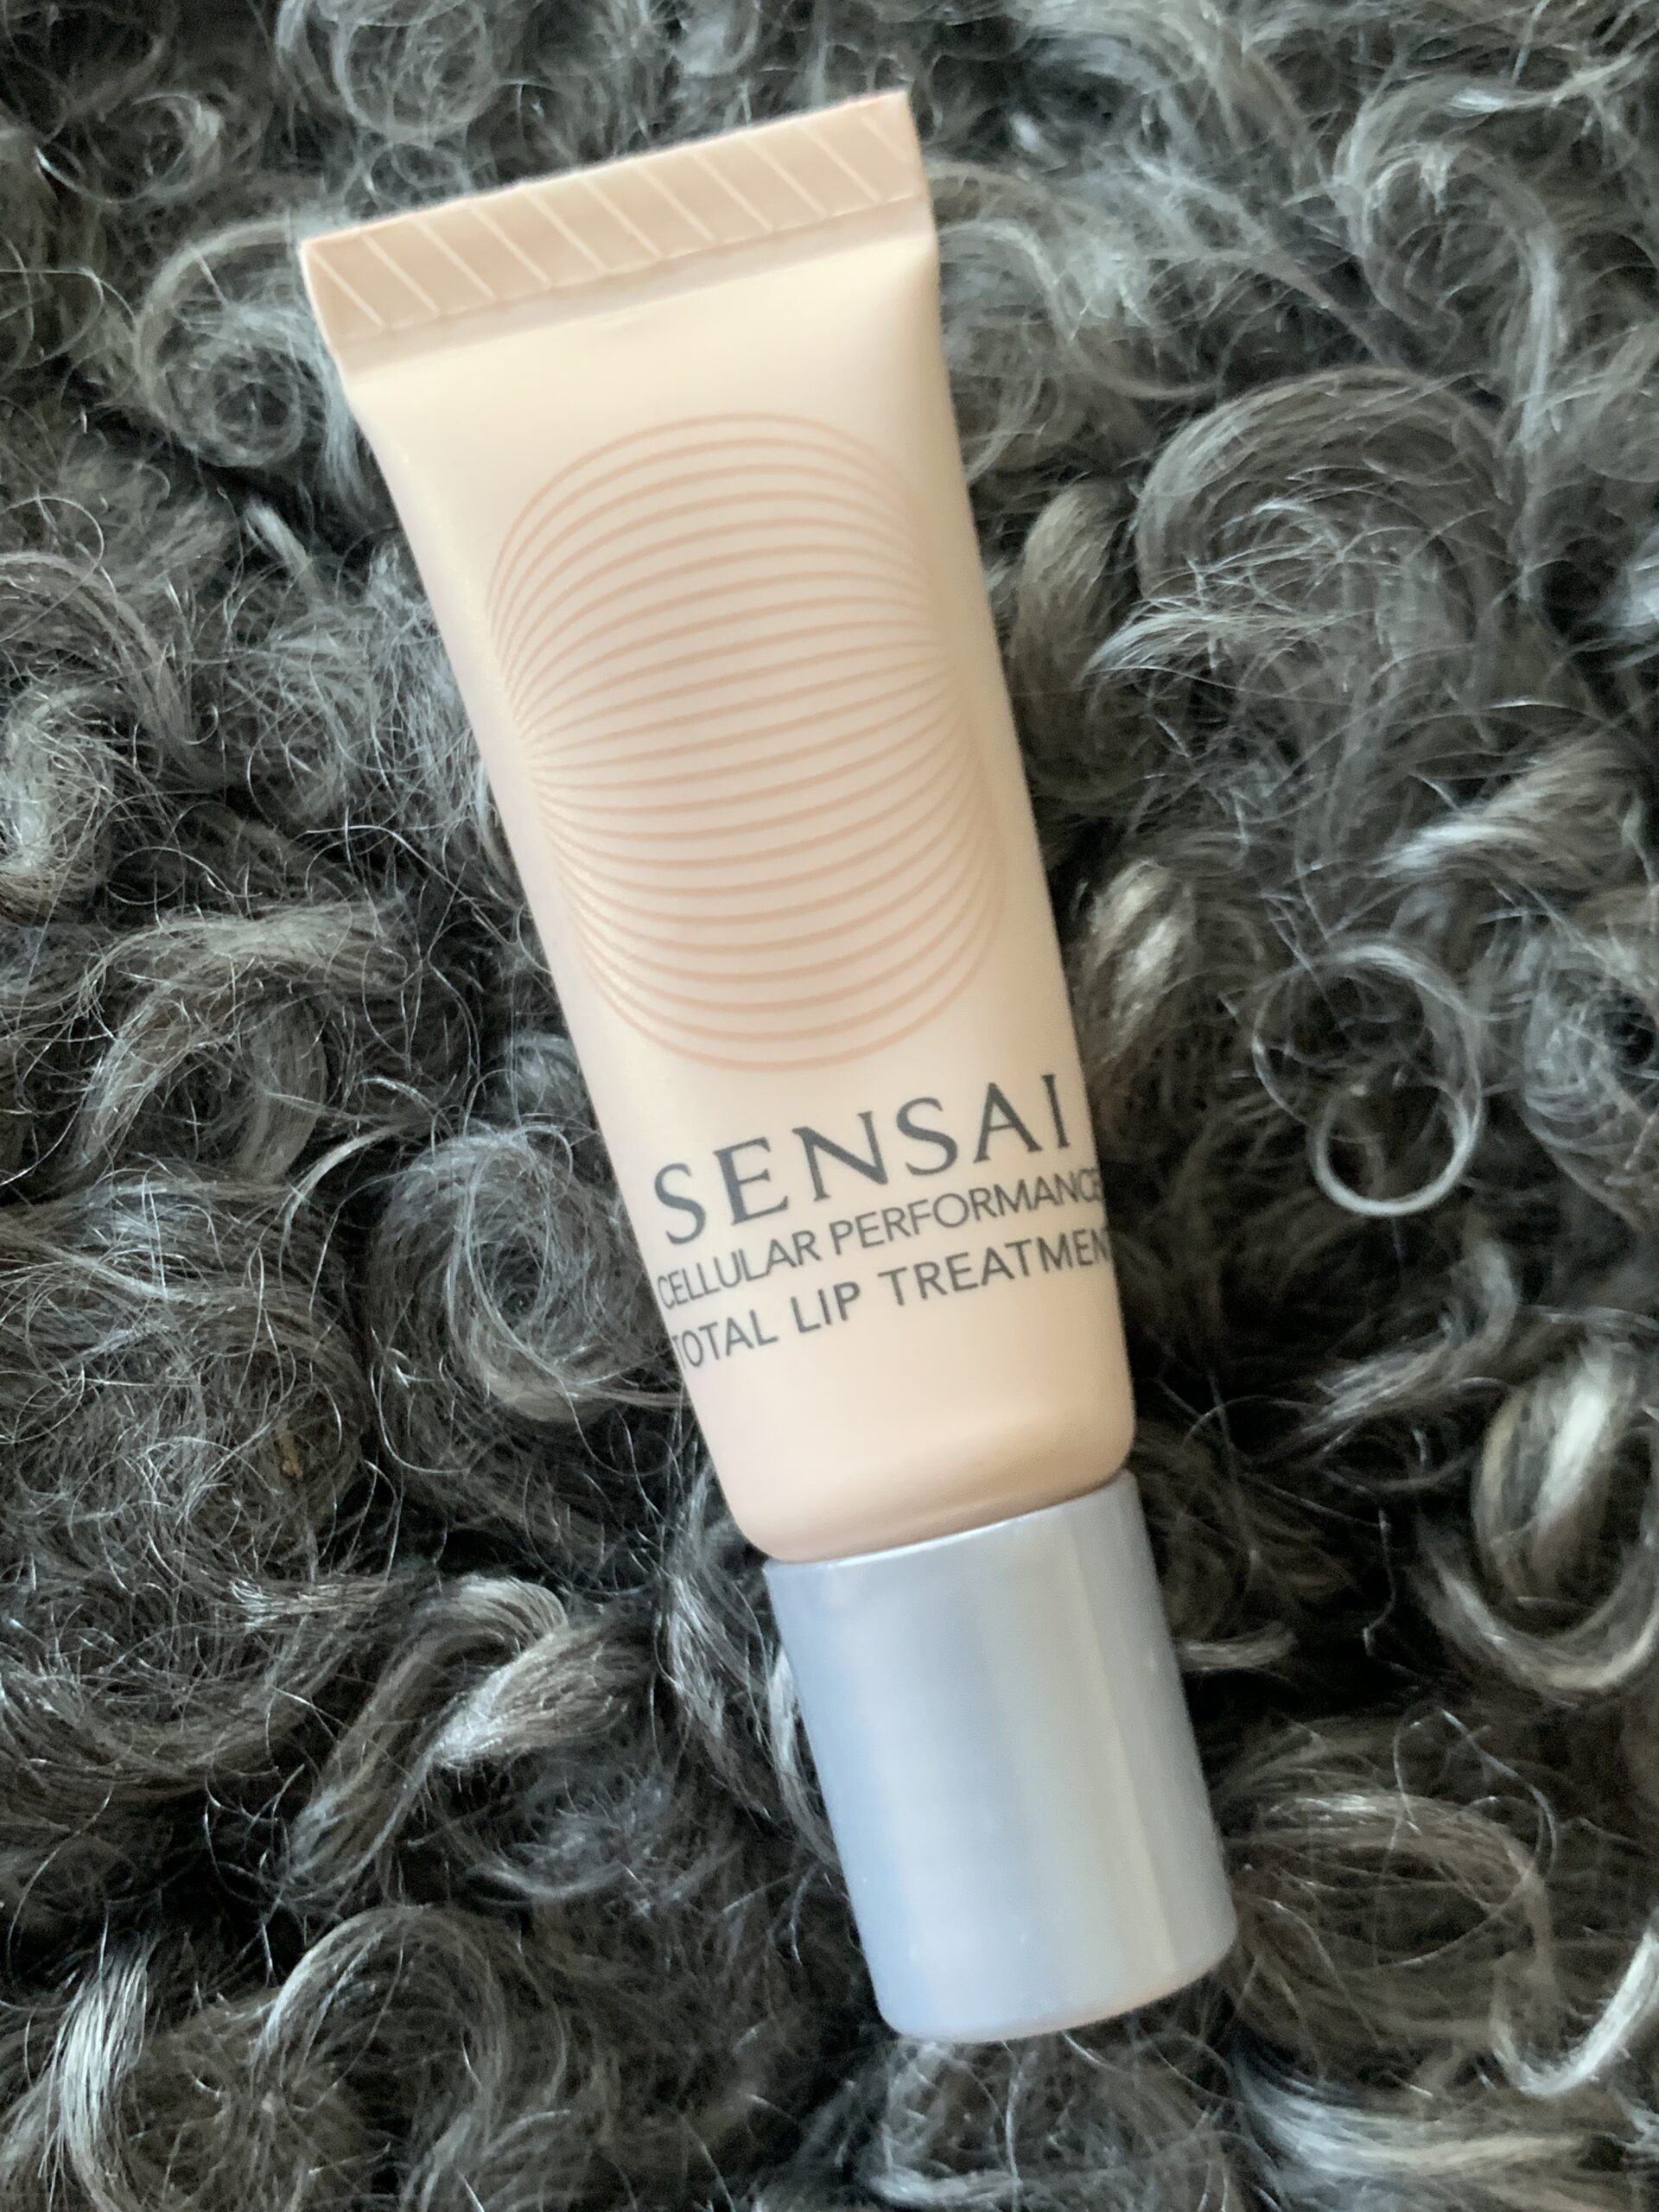 Sensai cellular performance total lip treatment